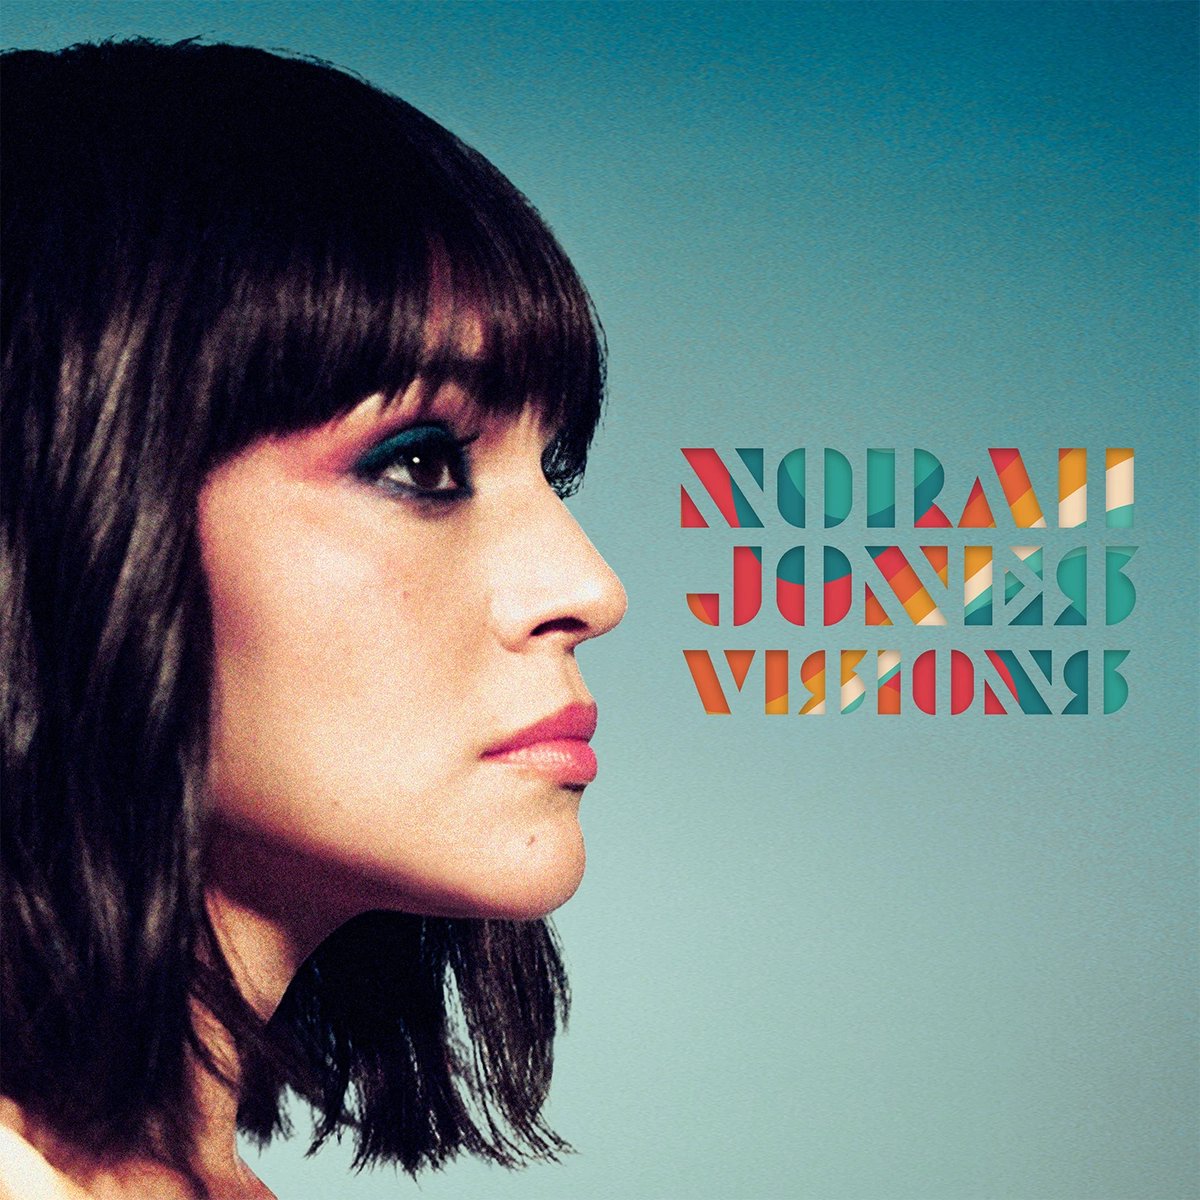 Джаз Blue Note Norah Jones - Visions - alternative artwork (Limited Indie Orange Swirl Vinyl  LP) рок interscope imagine dragons night visions